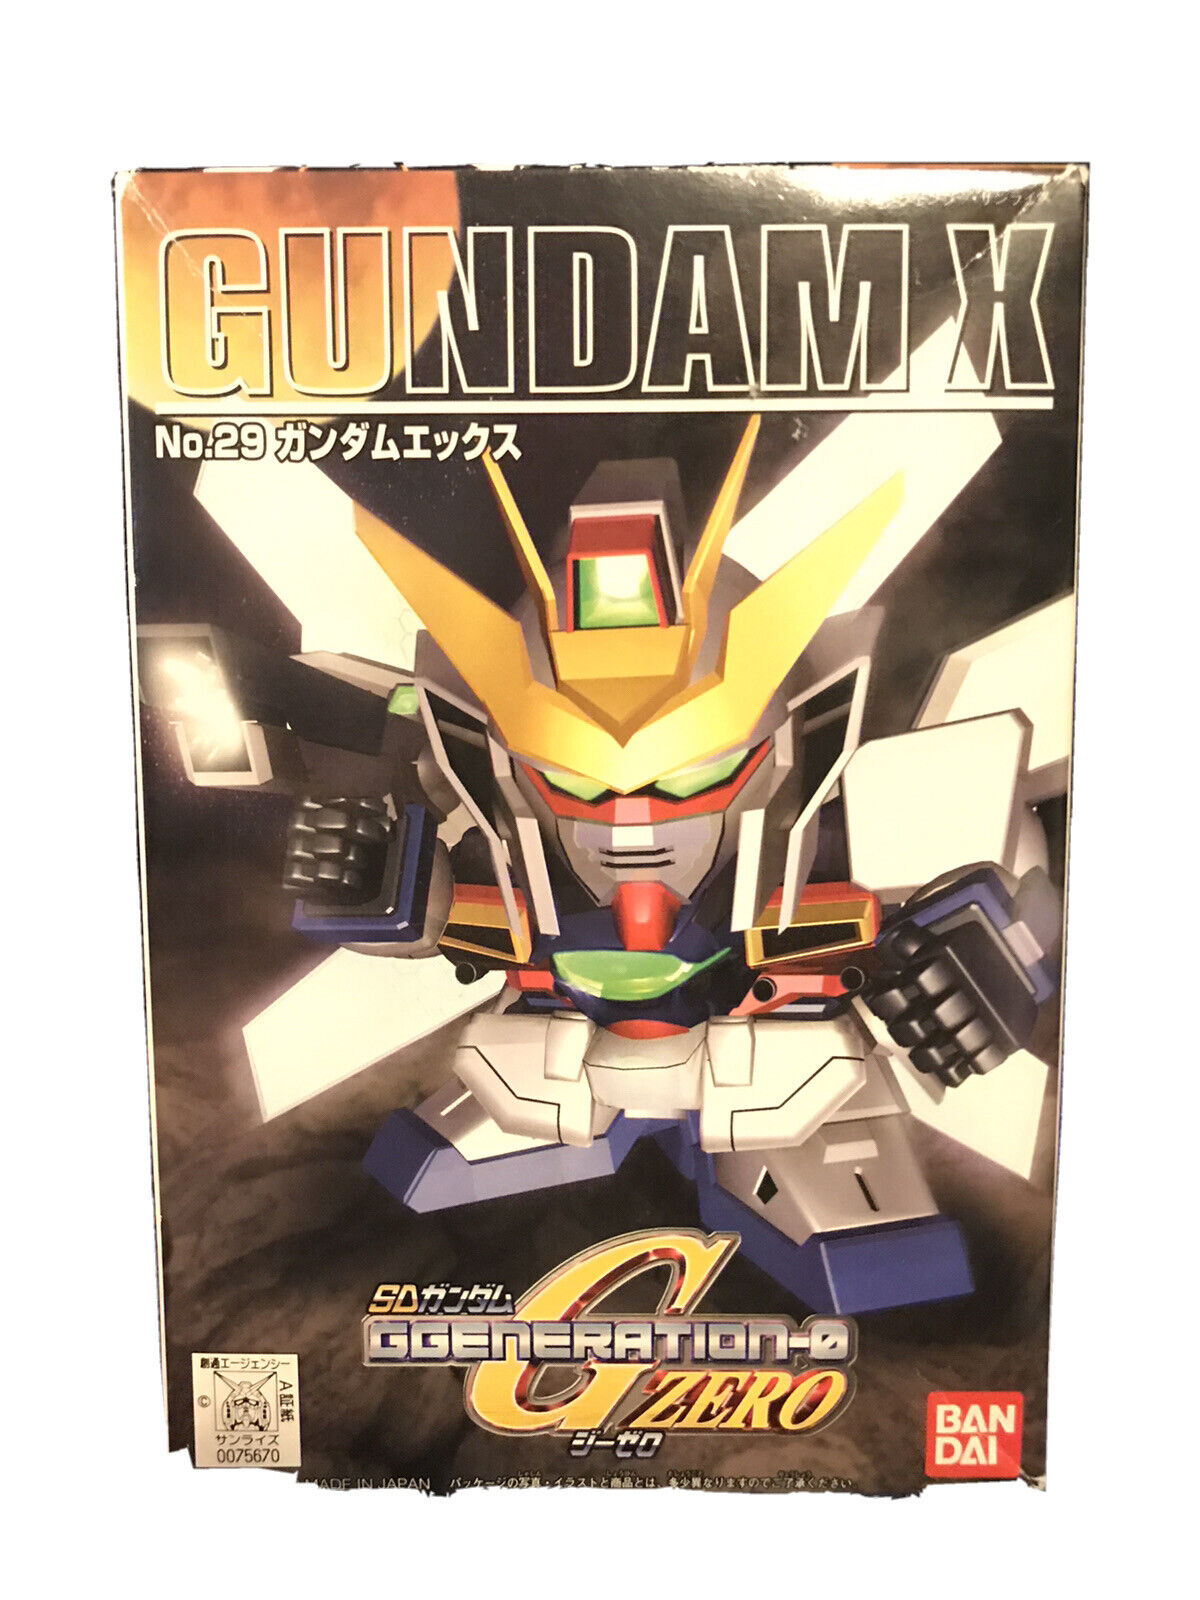 Brand New Sealed Bandai Gundam X No 29 SD G-Generation-0 GX-9900 Model Kit  2000